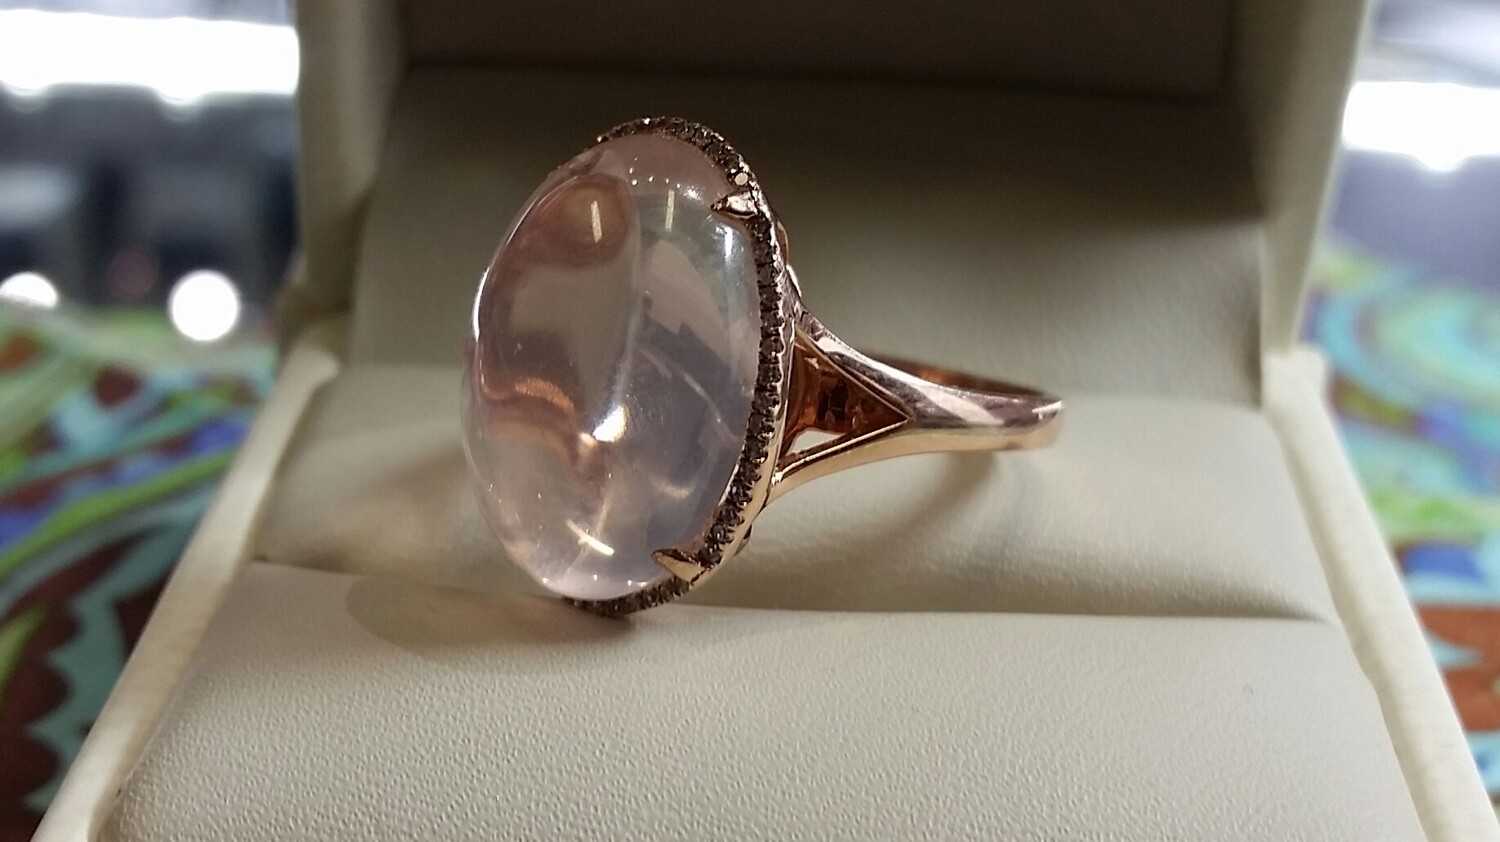 1.25 Carat Unique Natural Rose Quartz Engagement Ring Pear Cut Diamond Band